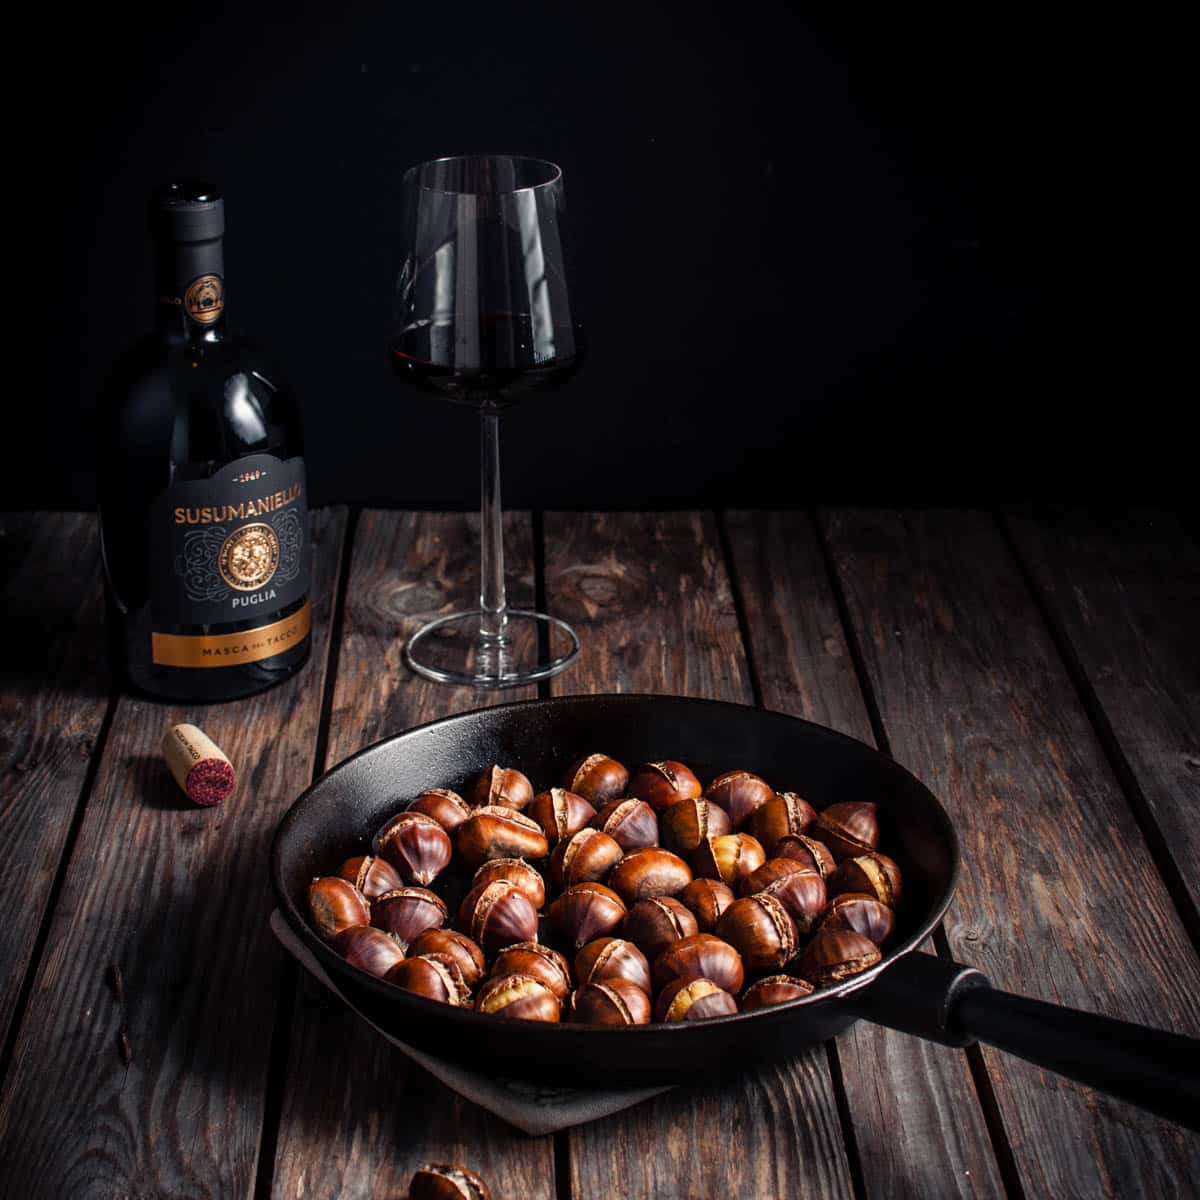 Oven Roasted Chestnuts – Italian style